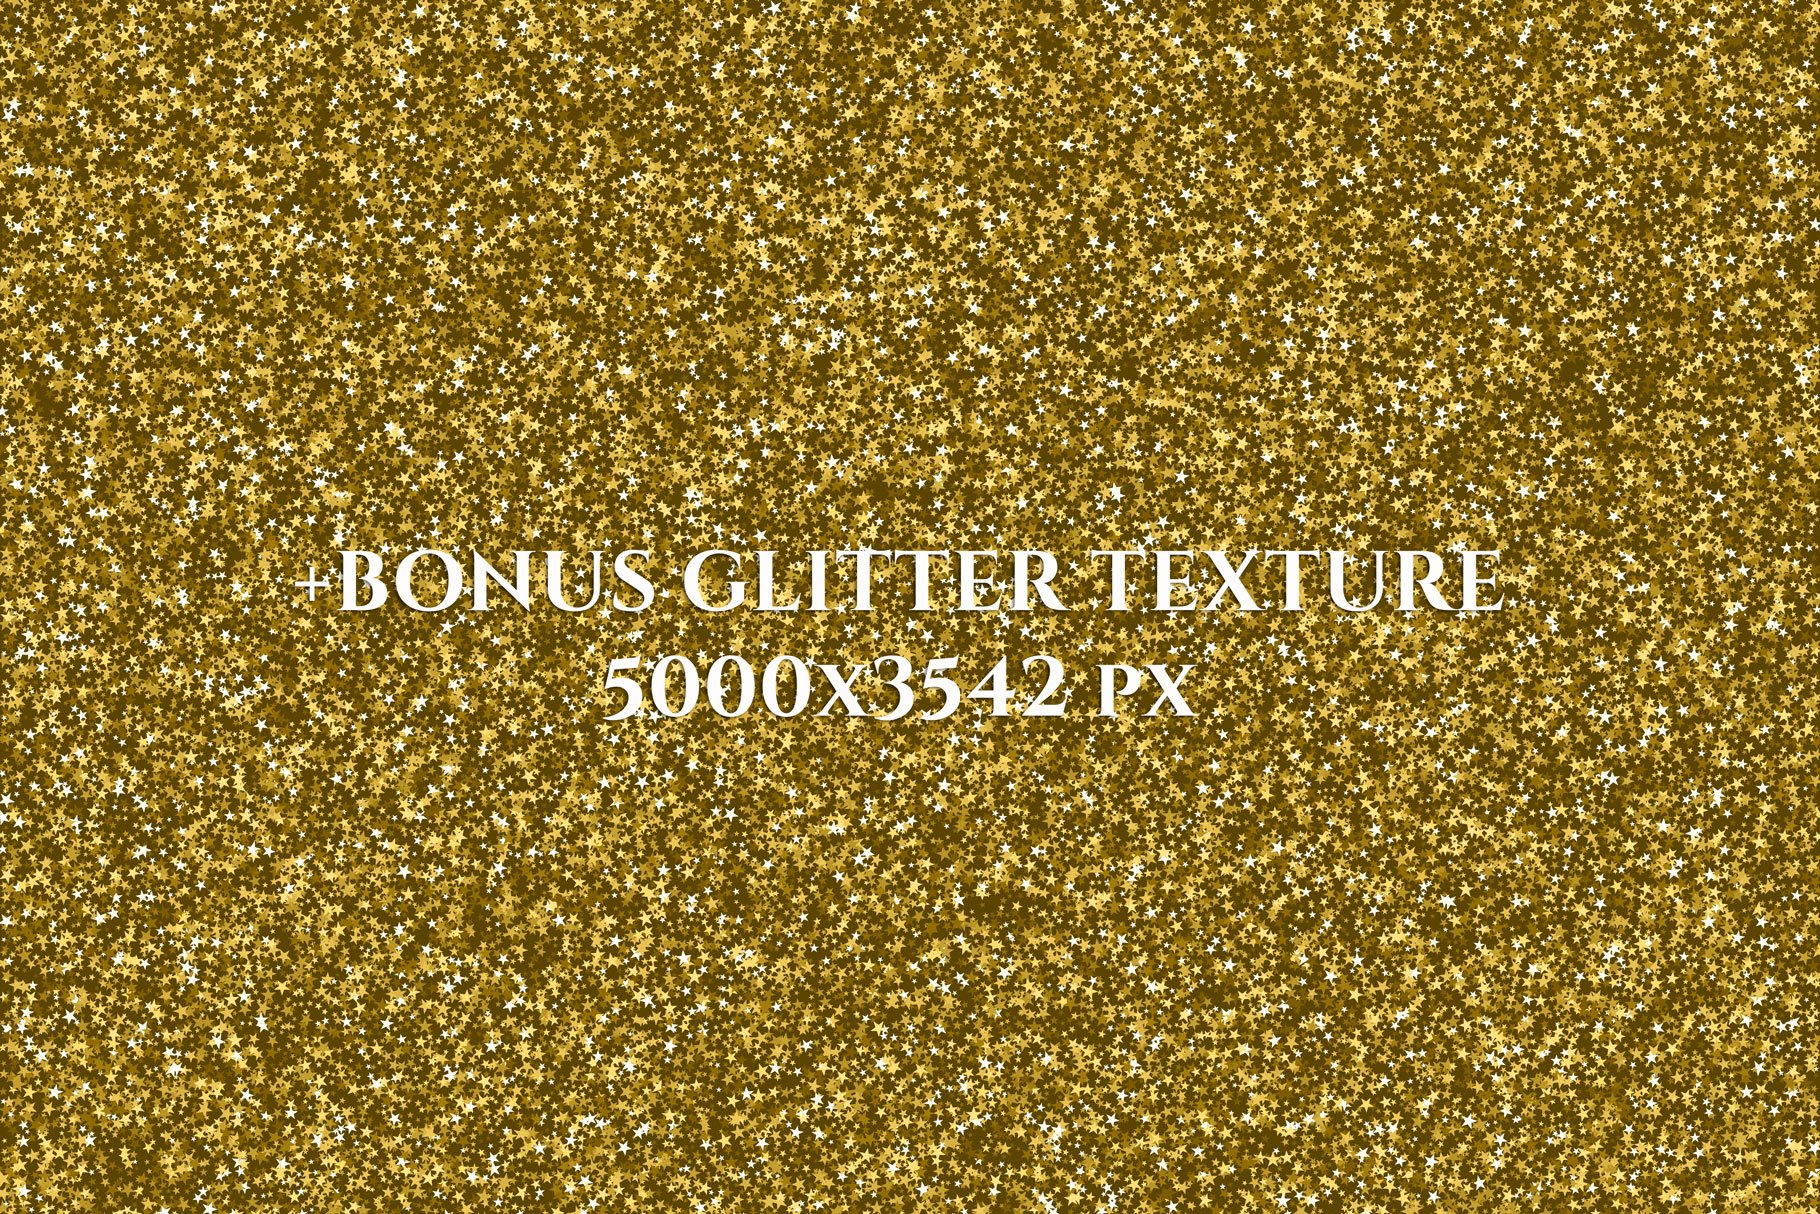 You will het glitter stars texture as a bonus.